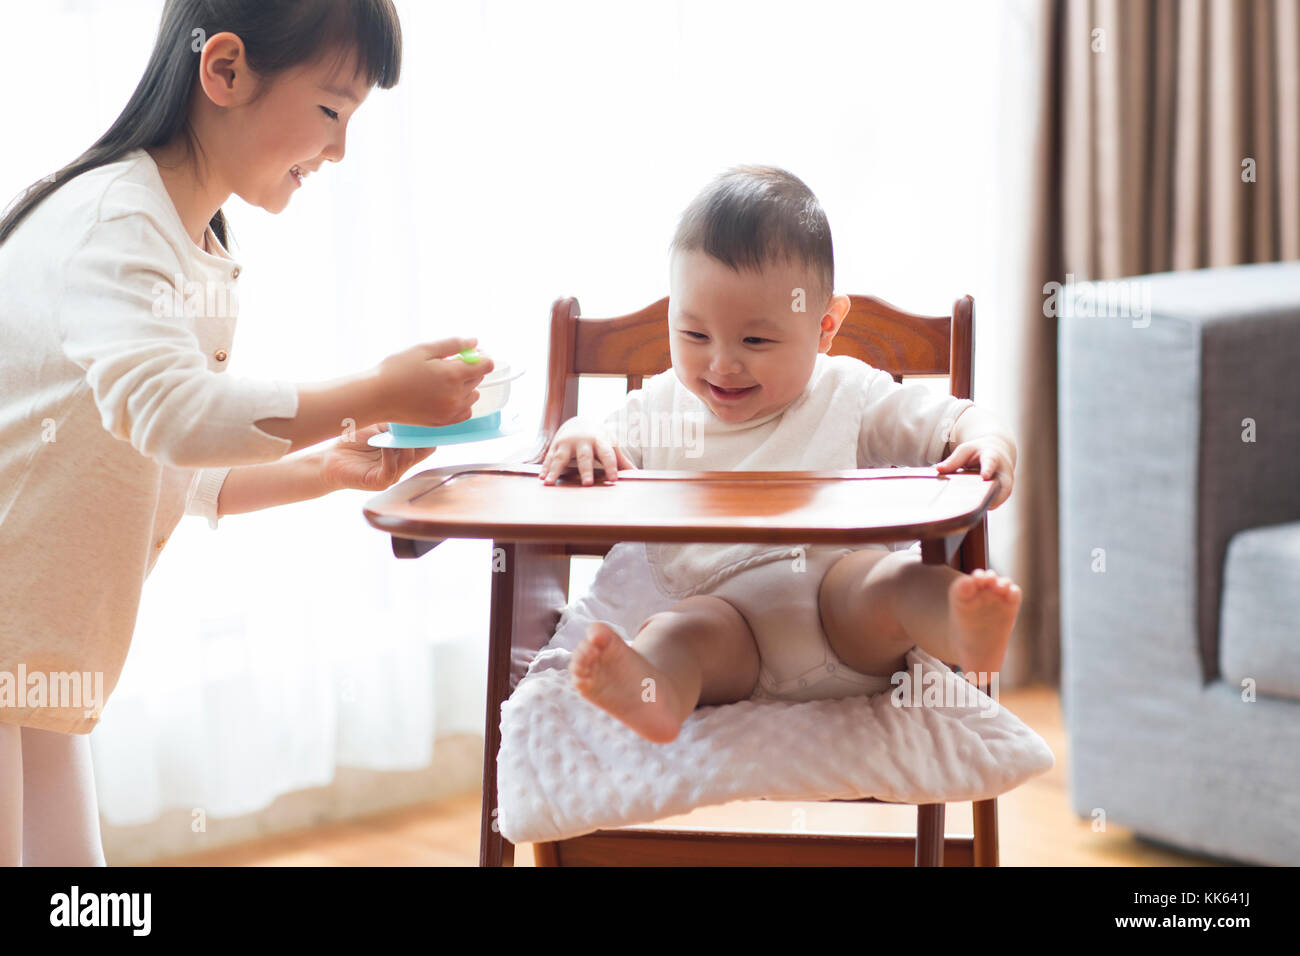 Little Chinese girl feeding baby Stock Photo